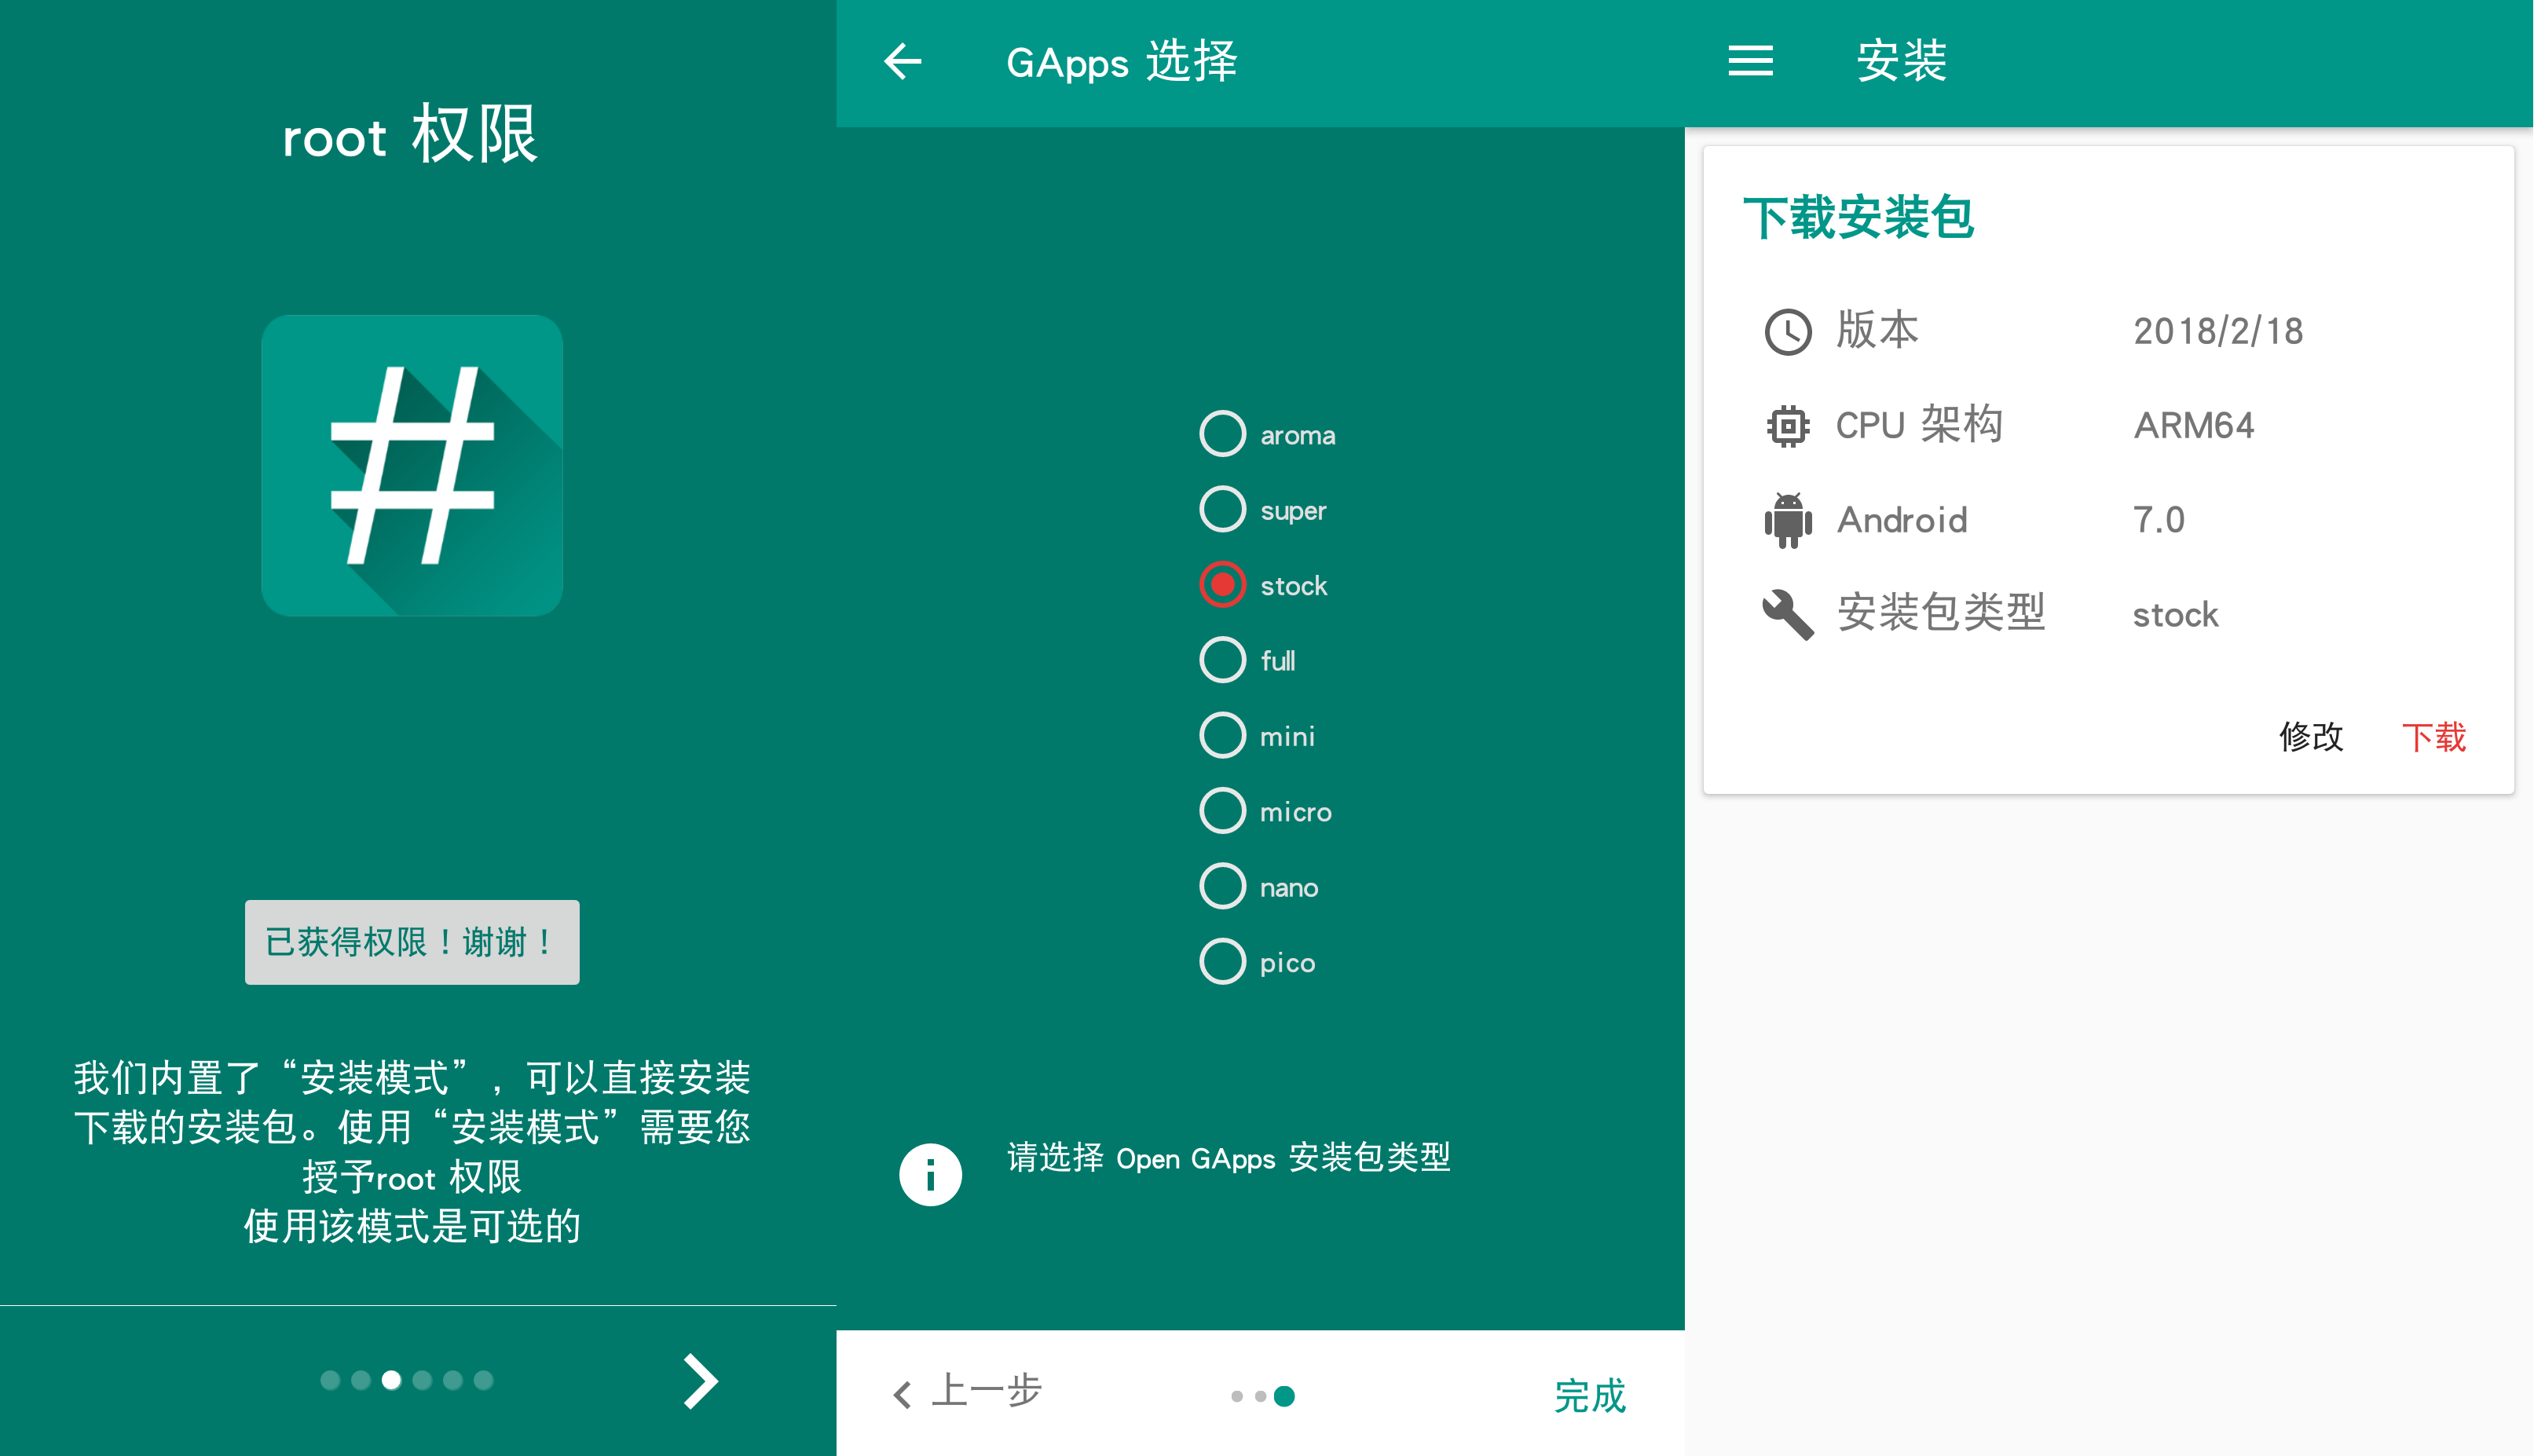 Open GApps App